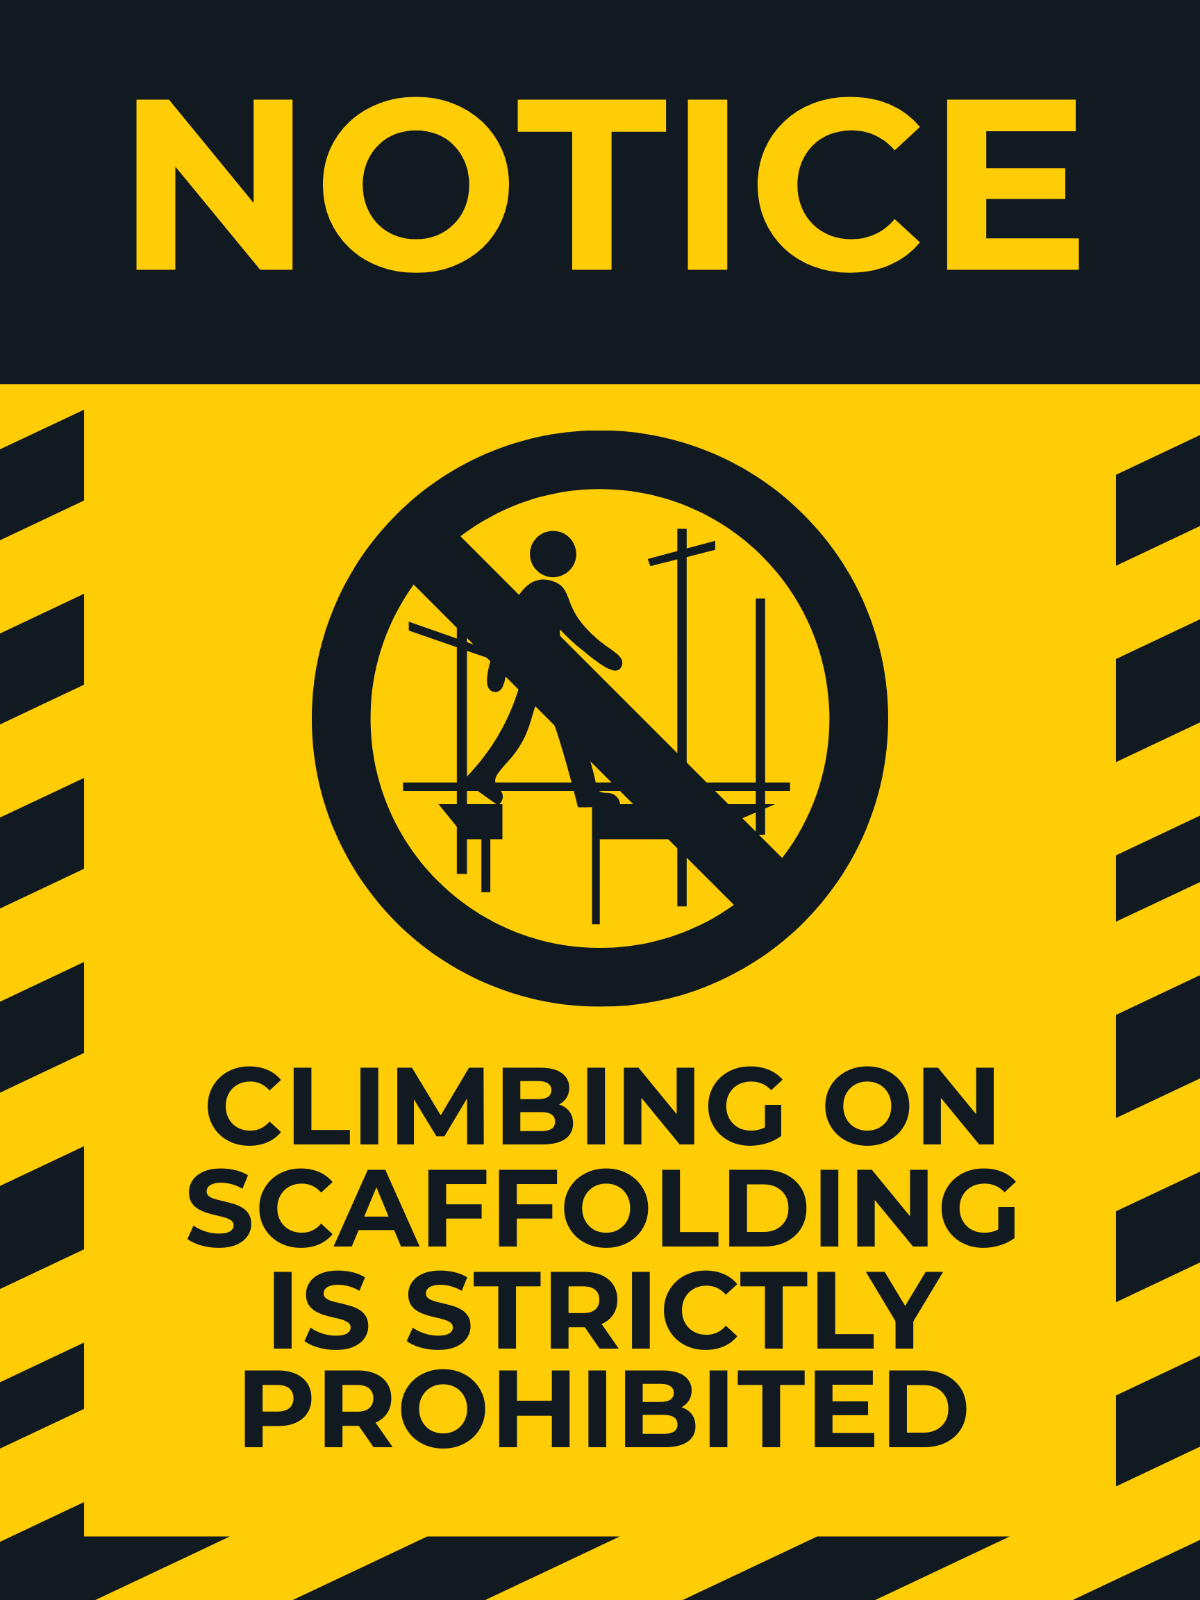 Danger - Do Not Climb on Scaffolding Sign